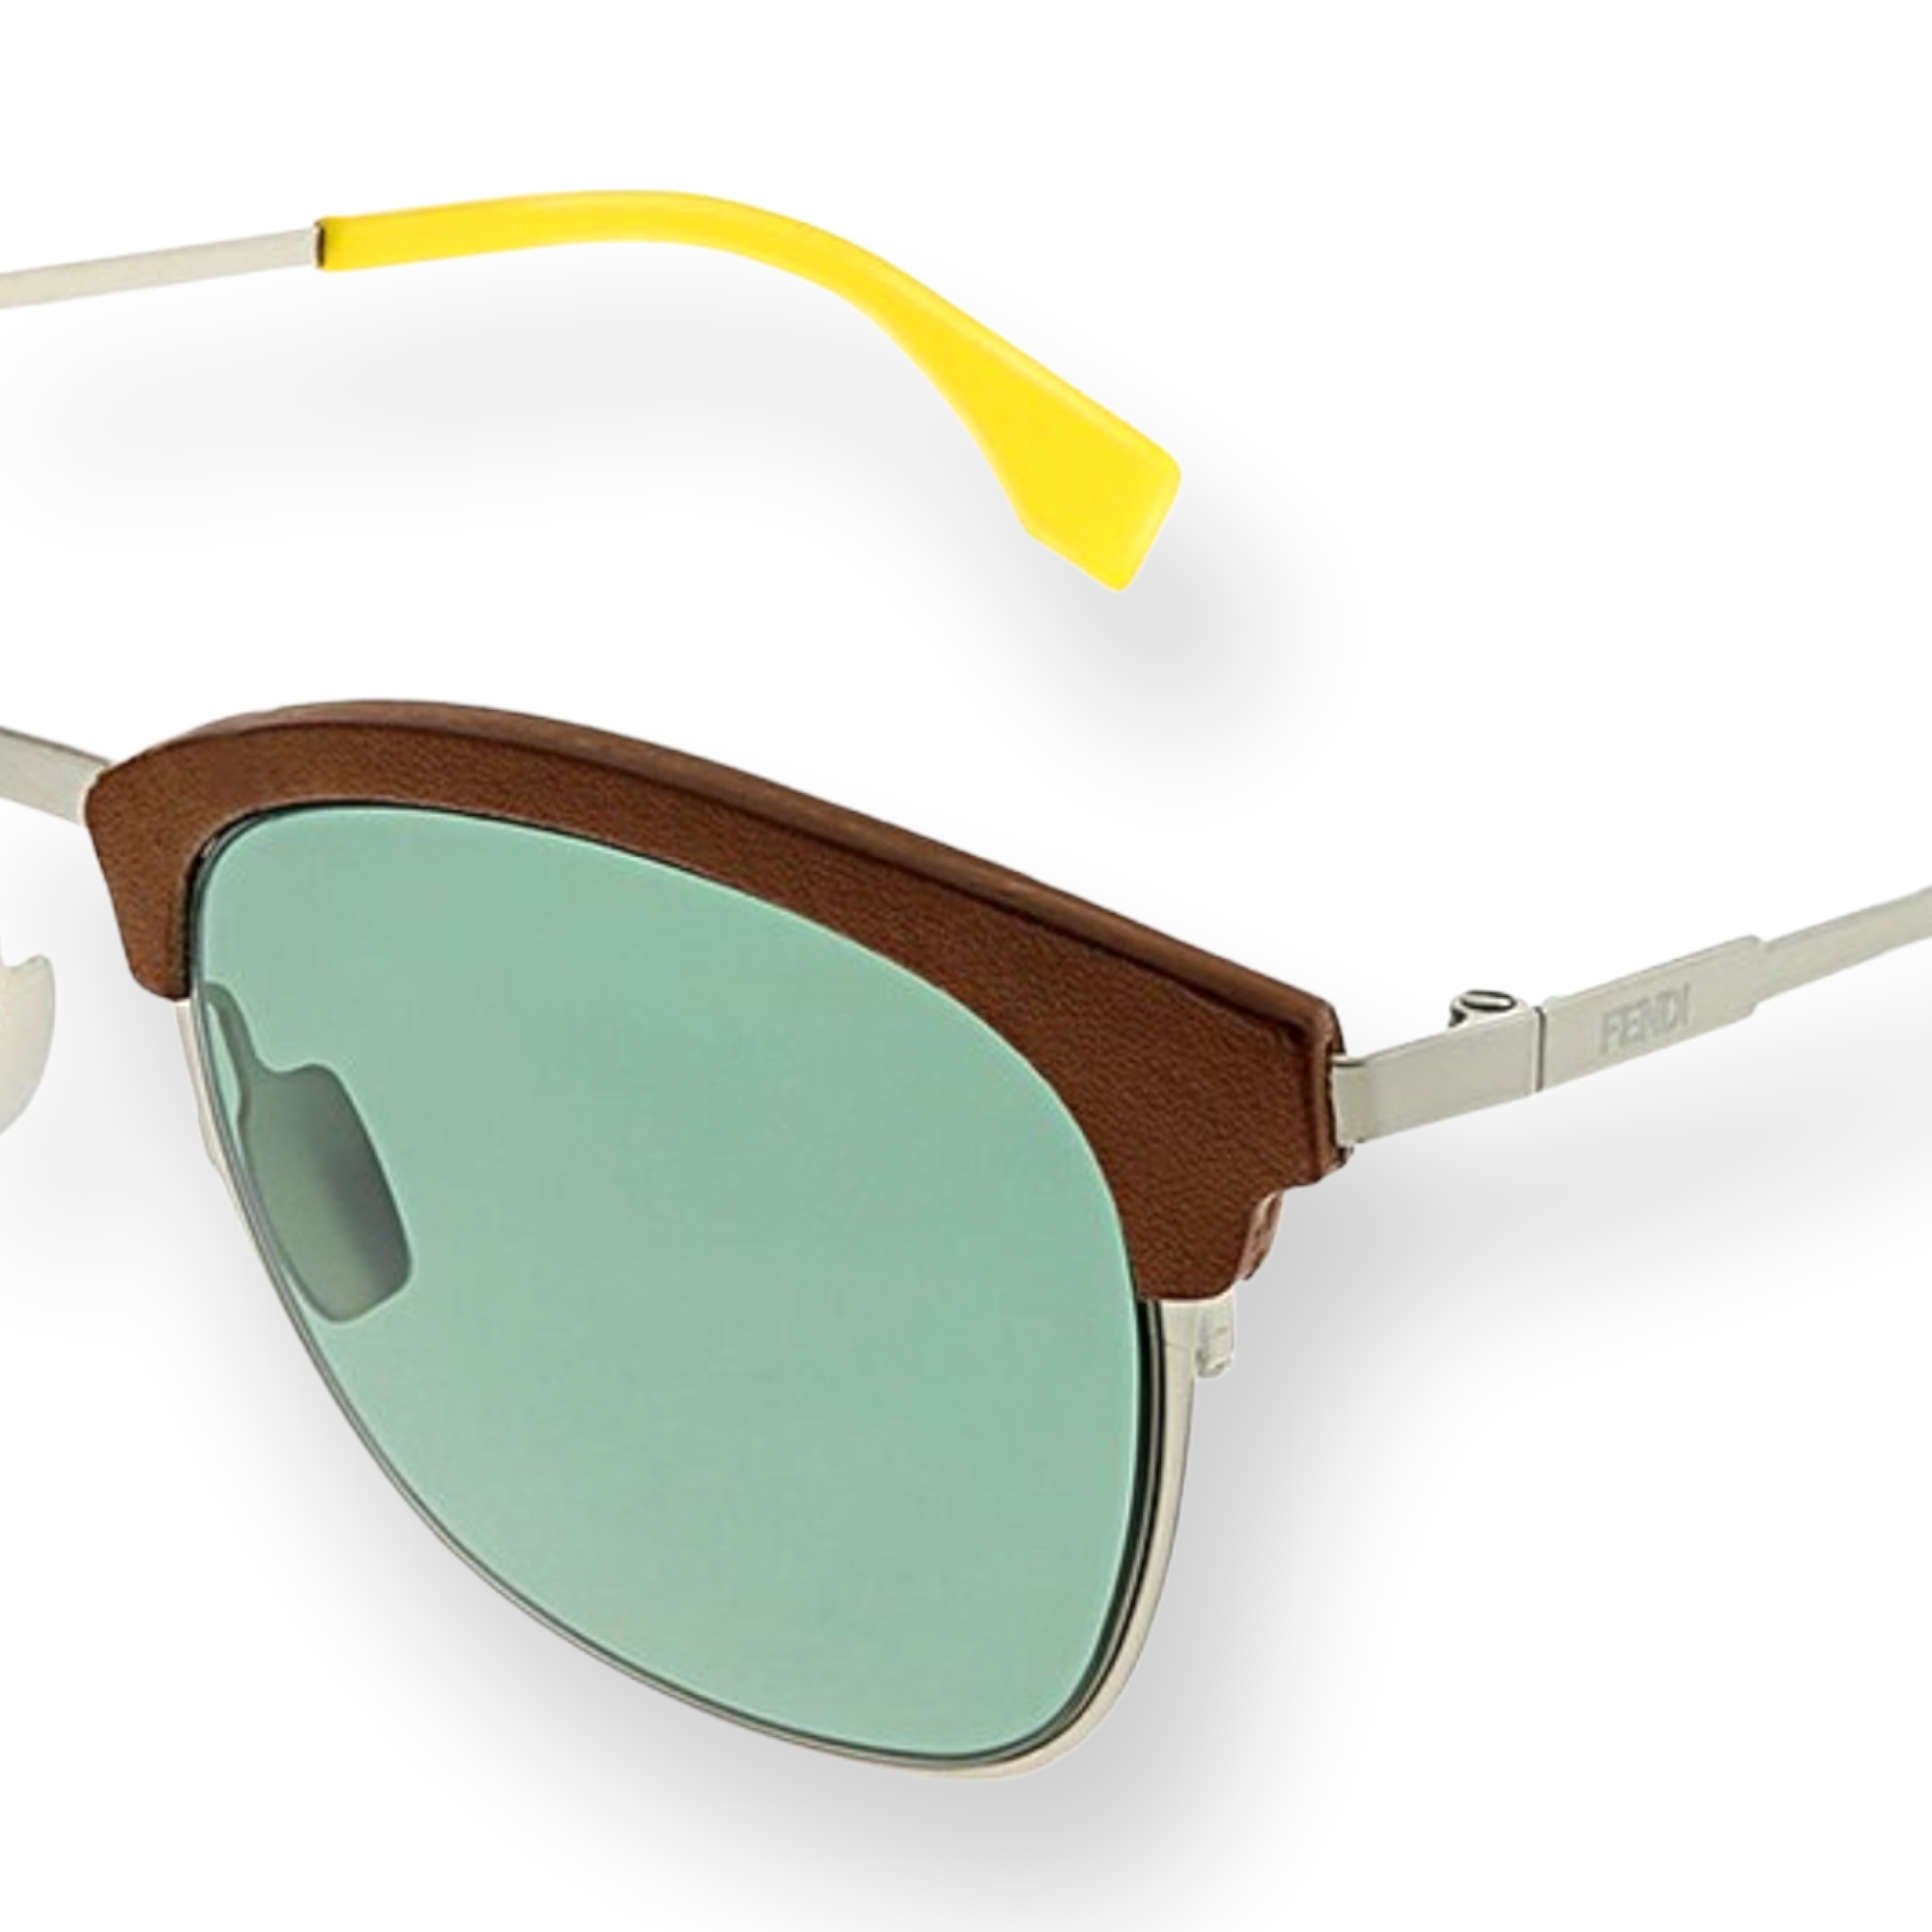 FENDI Men's 50mm Sunglasses